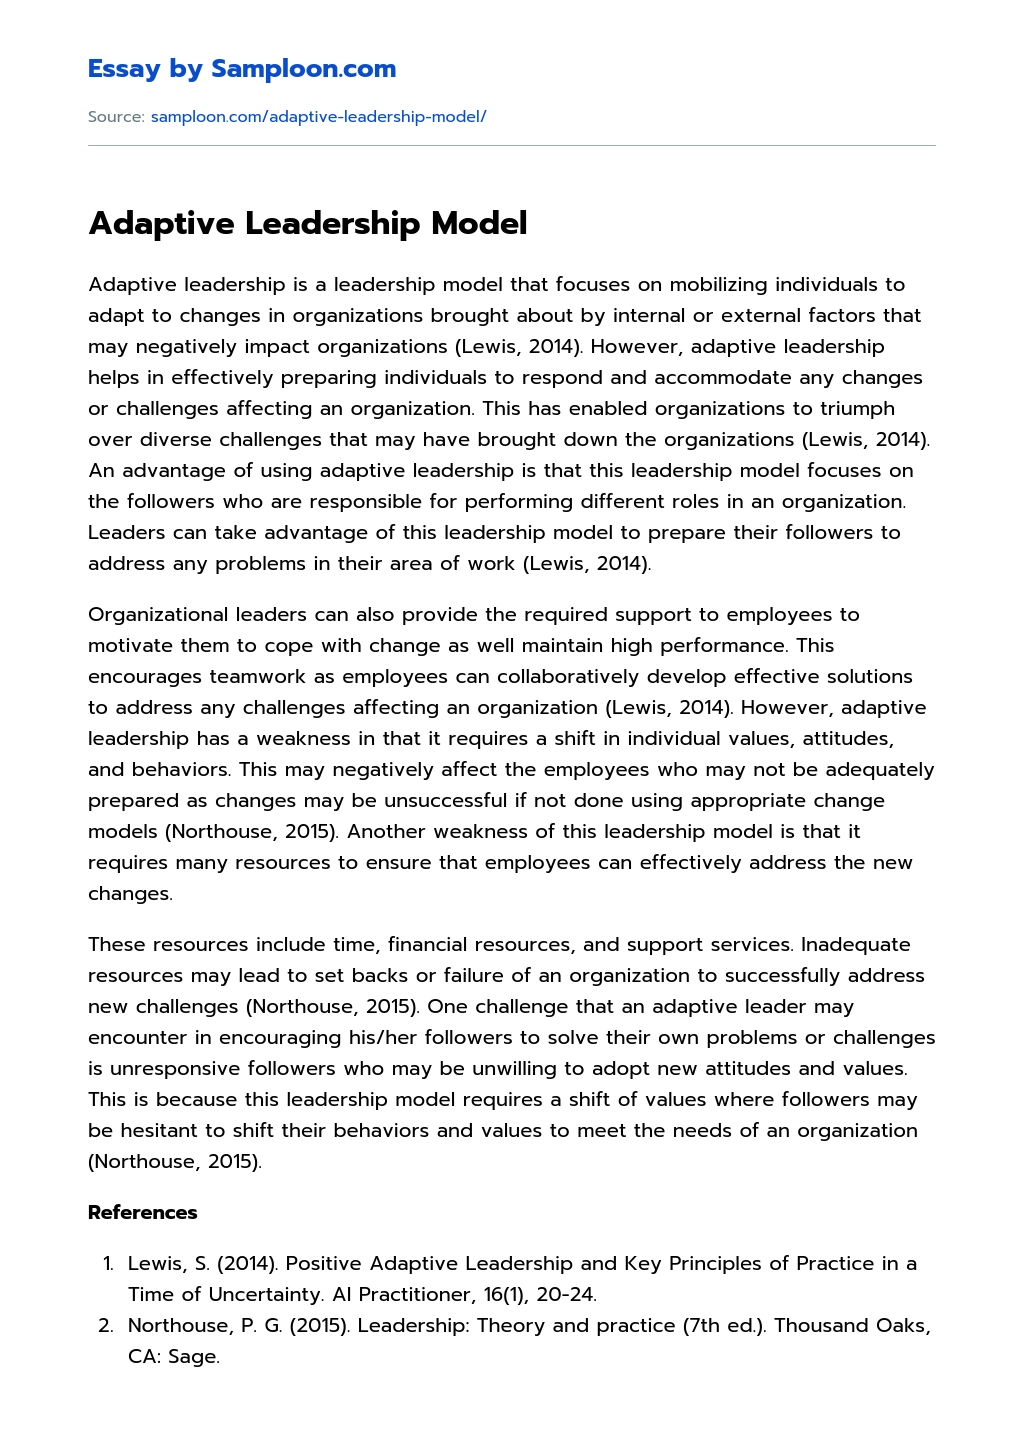 Adaptive Leadership Model essay